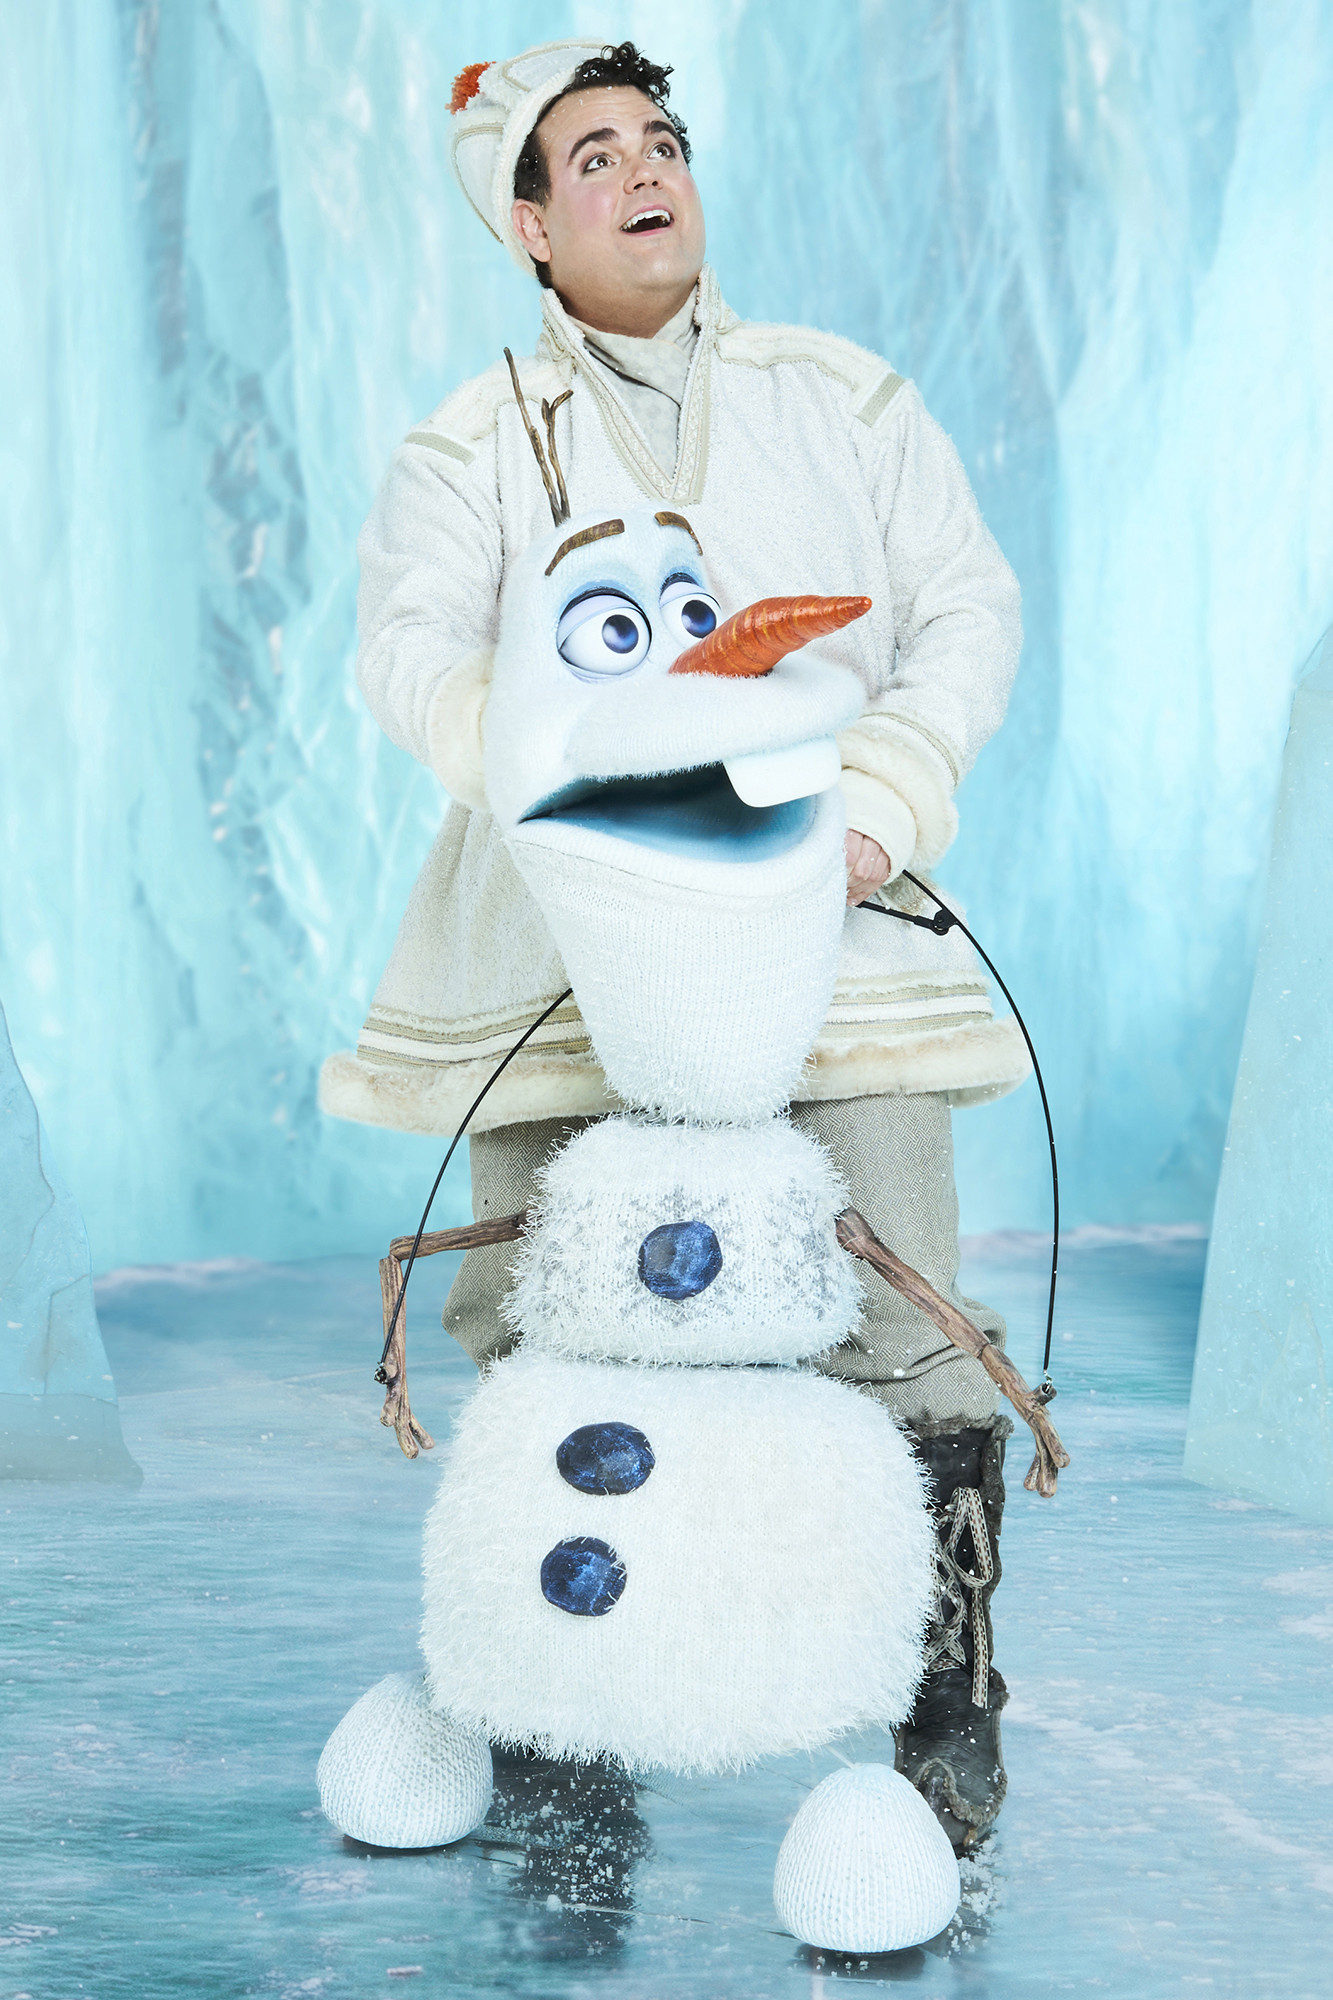 Meet the guy behind Olaf in Broadway's 'Frozen'